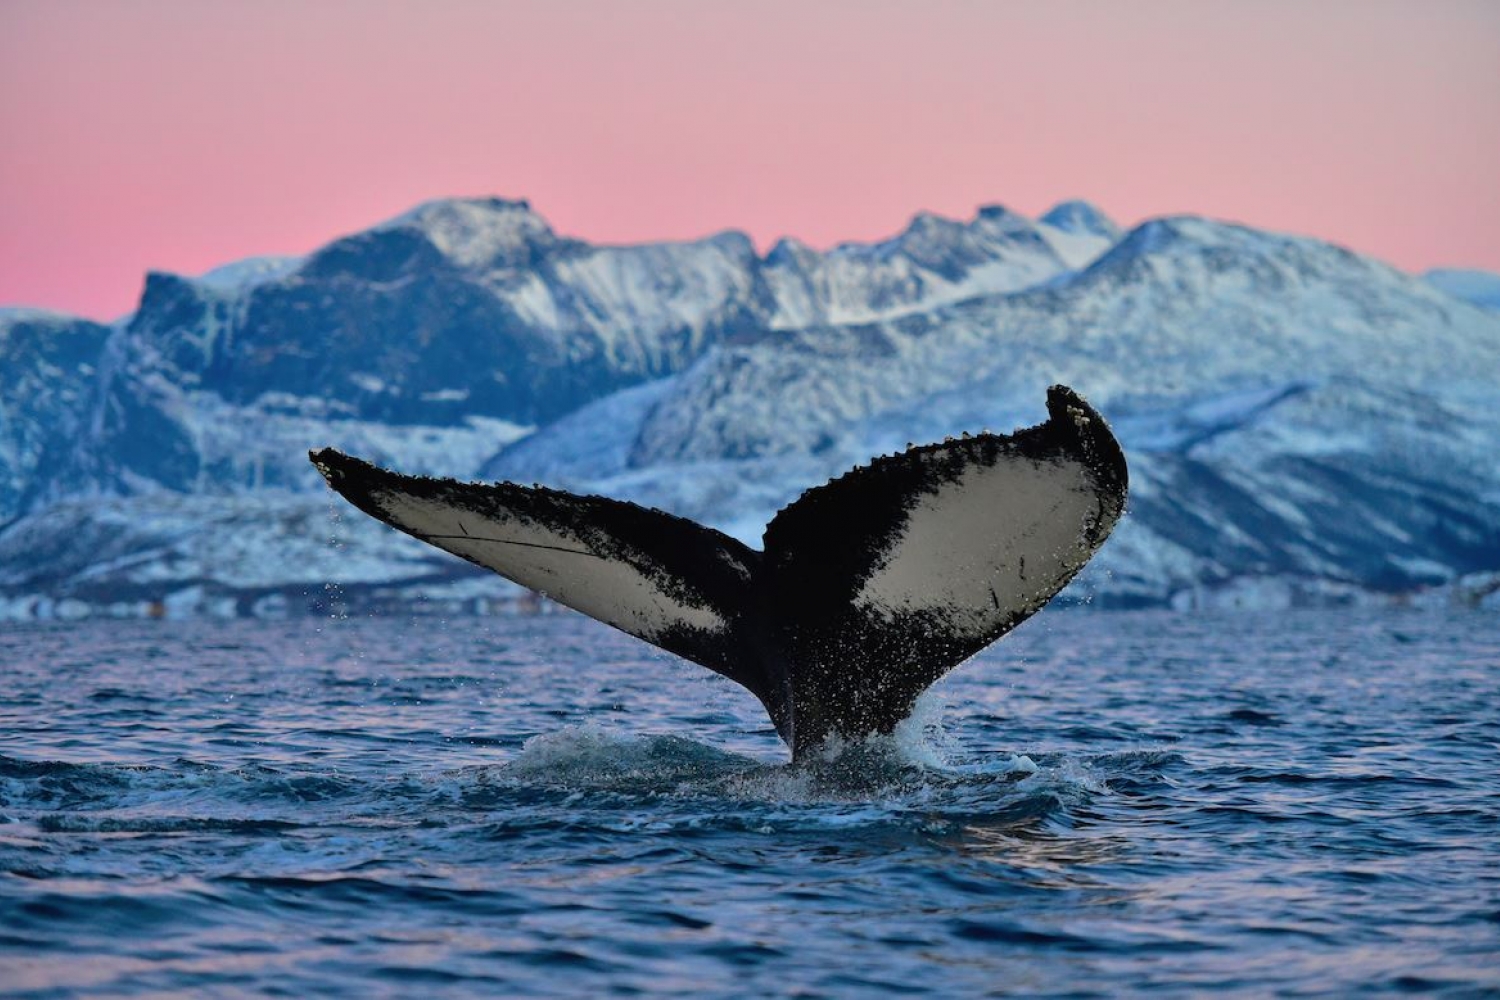 Tale fin of a humpback whale